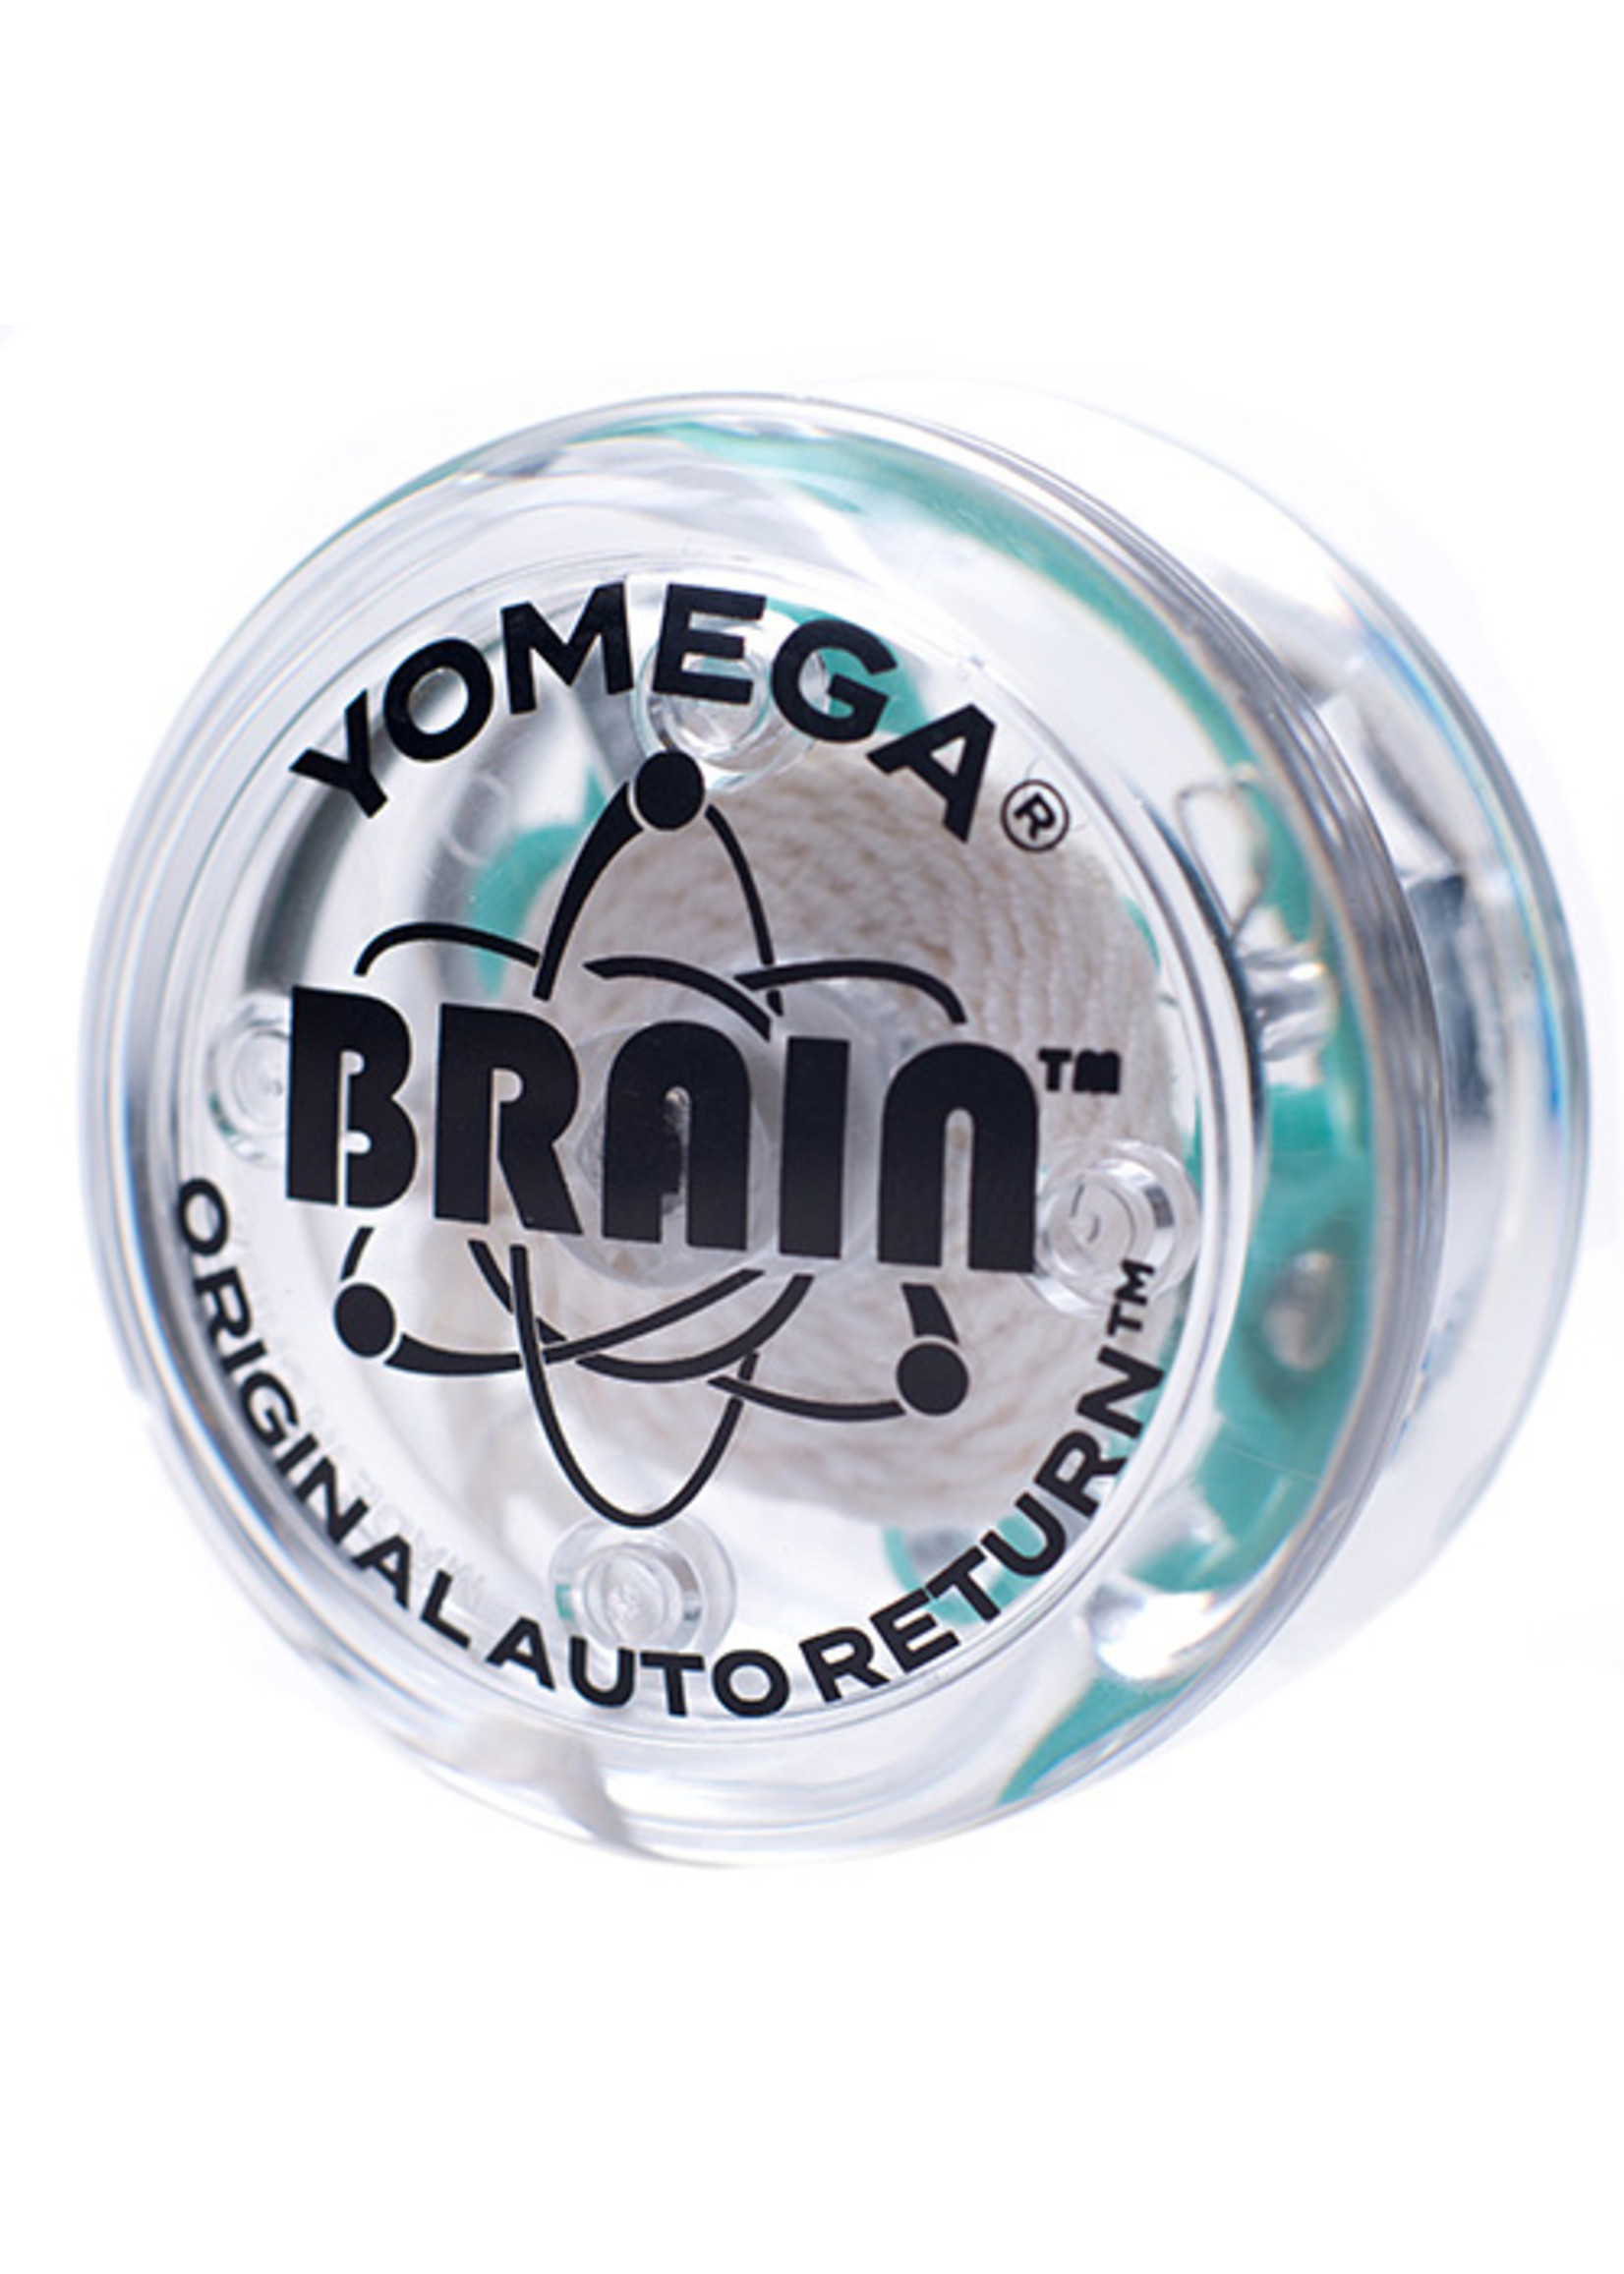 Yomega Brain - Assorted Colors